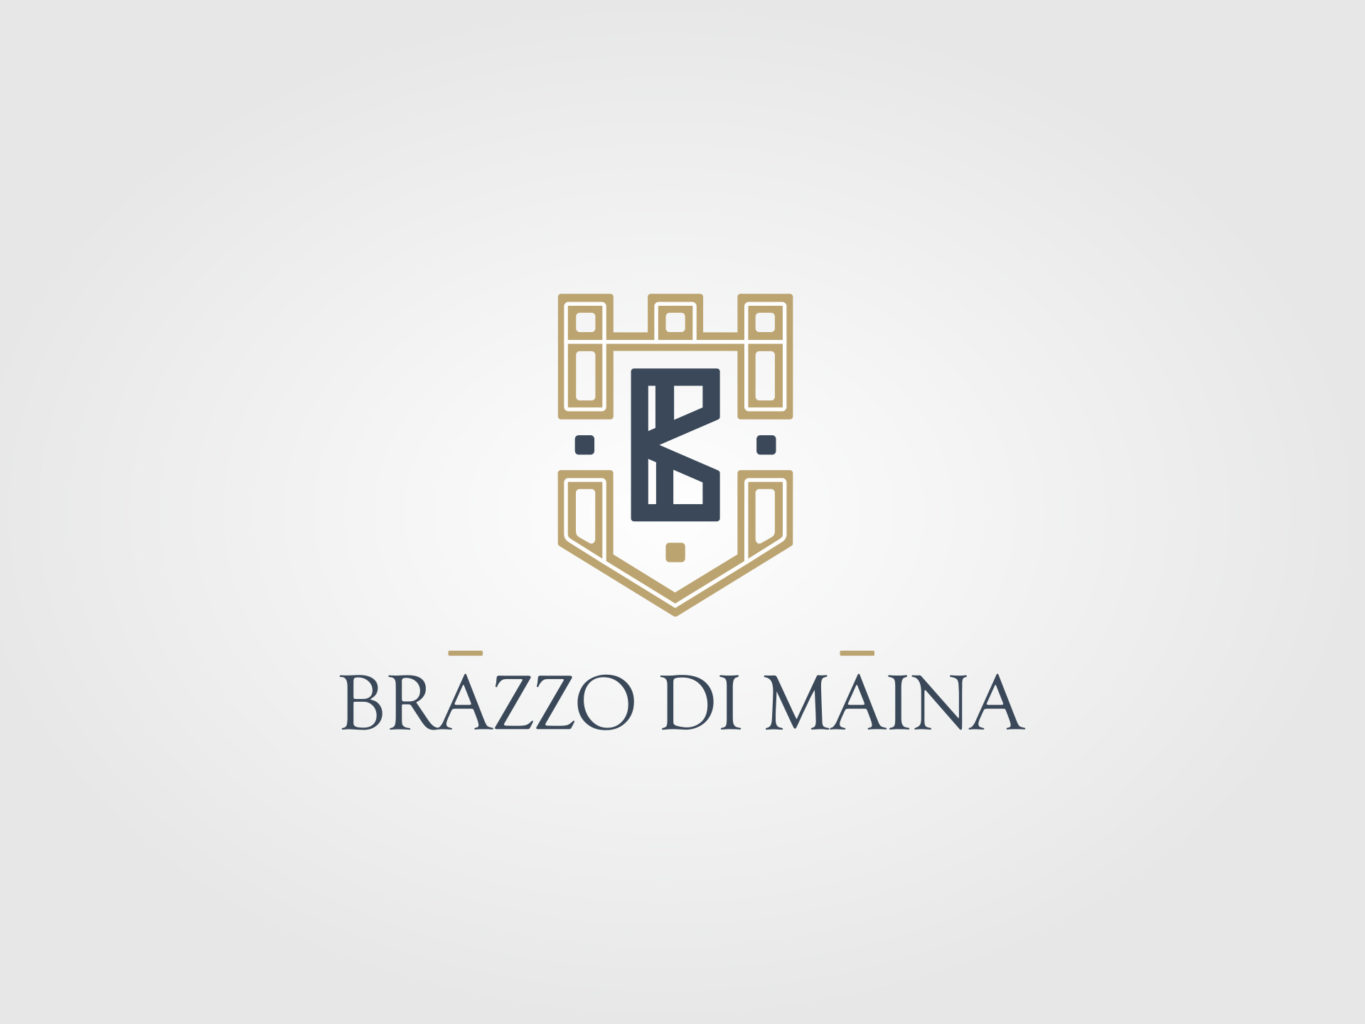 brazzo di maina logo by fiftyeggz